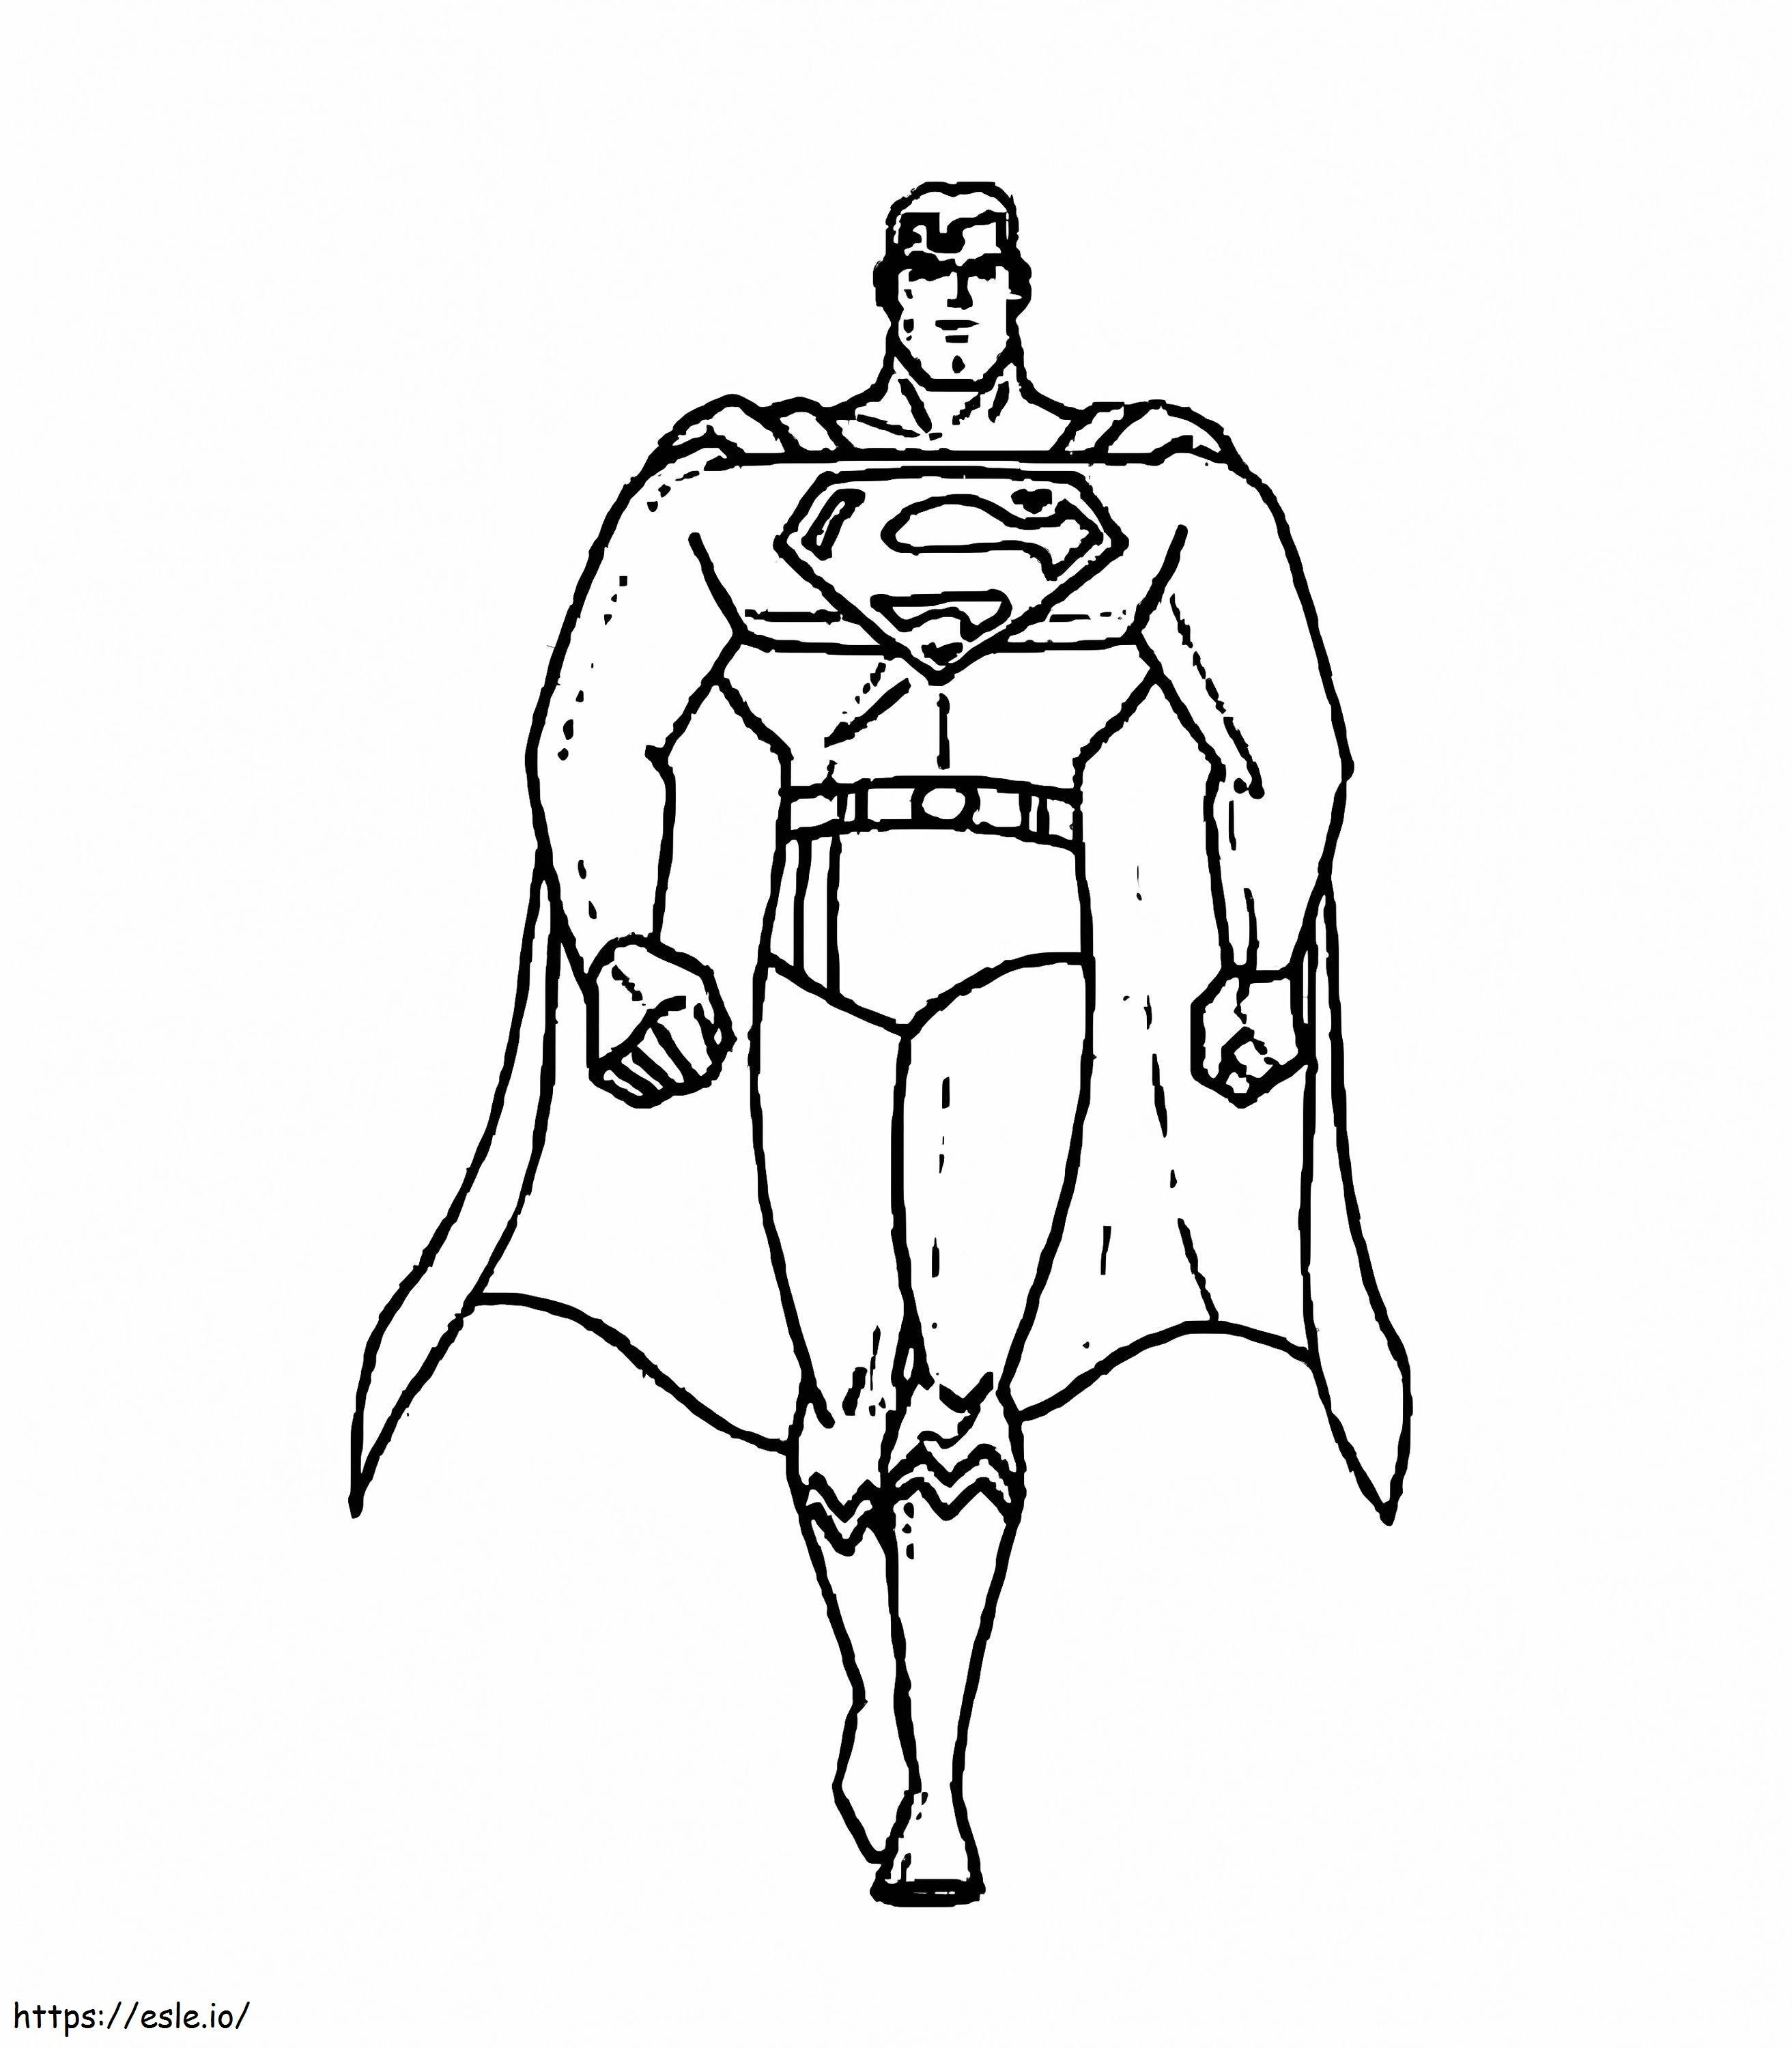 Superman Walks coloring page